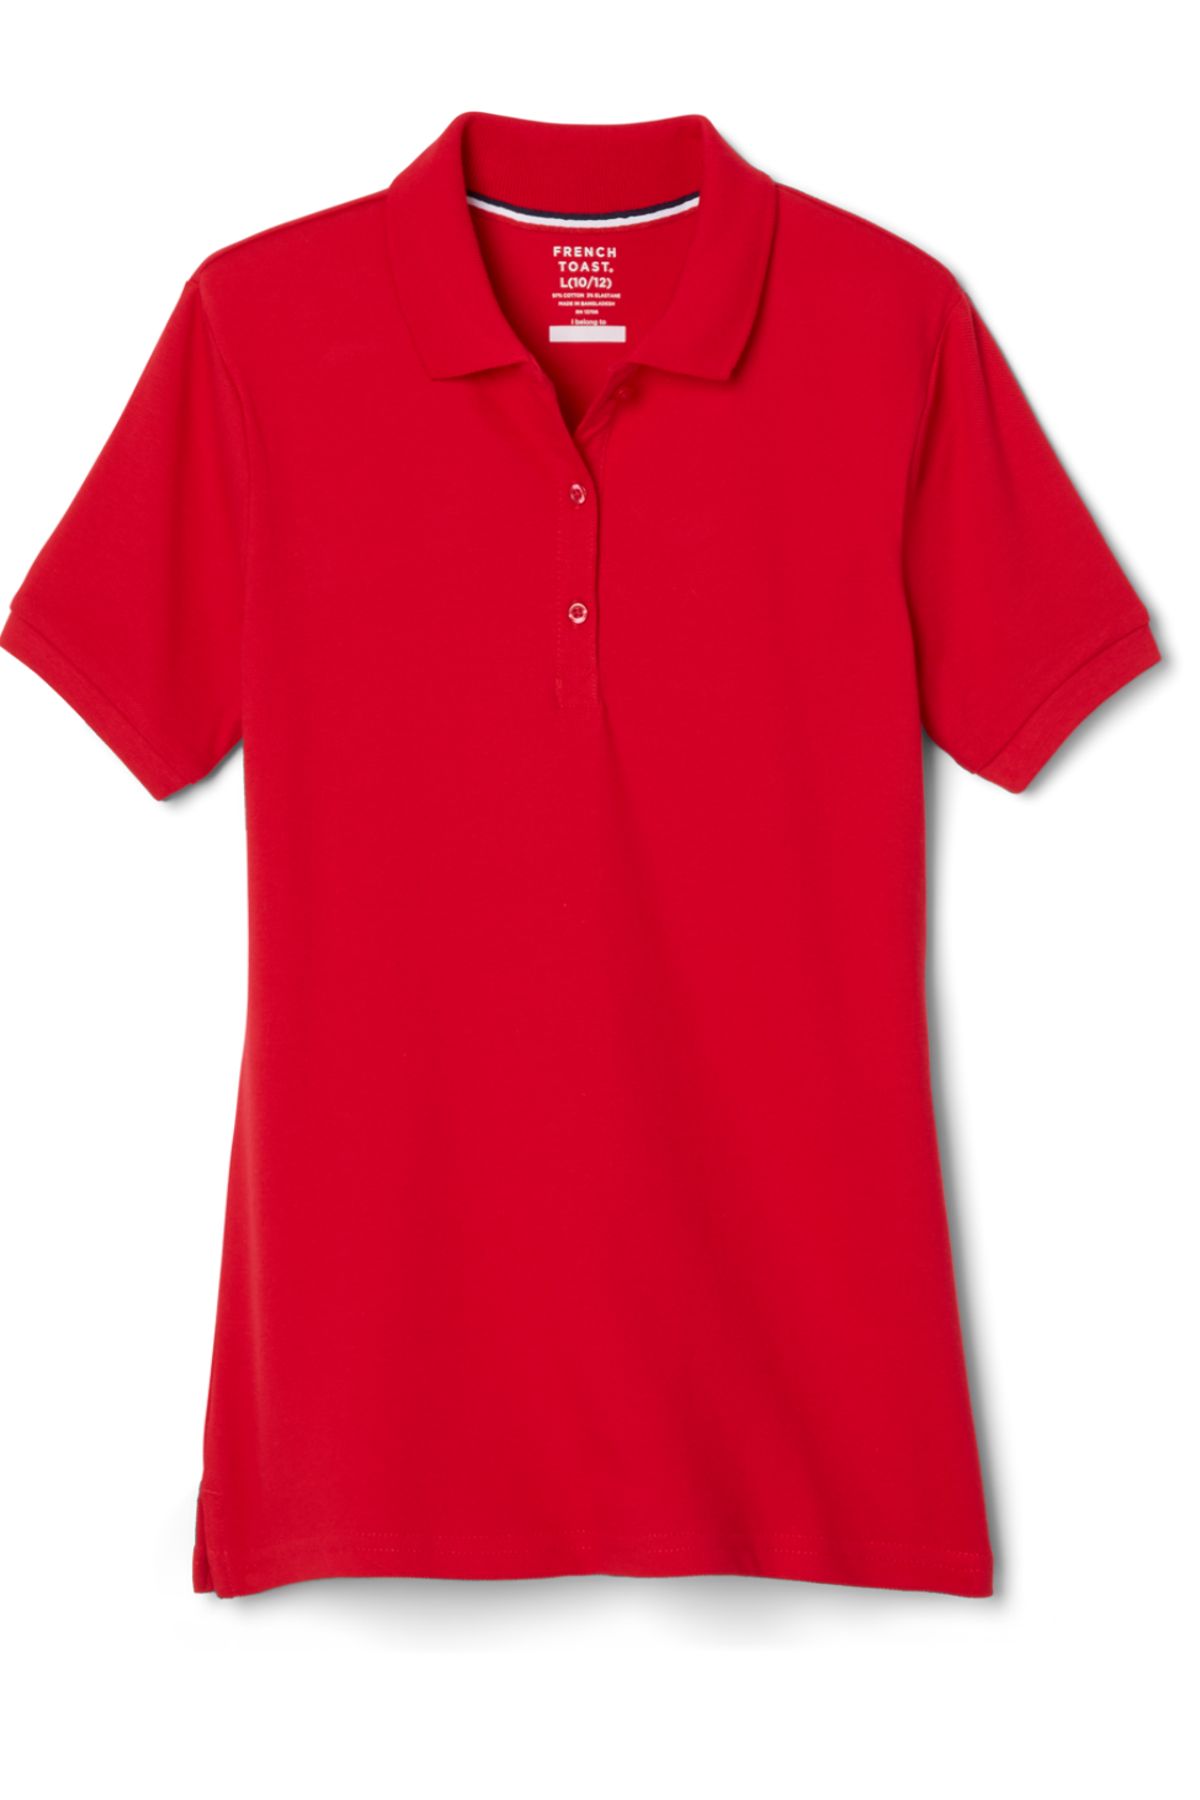 French Toast School Uniform Unisex Short Sleeve Pique Knit Shirt